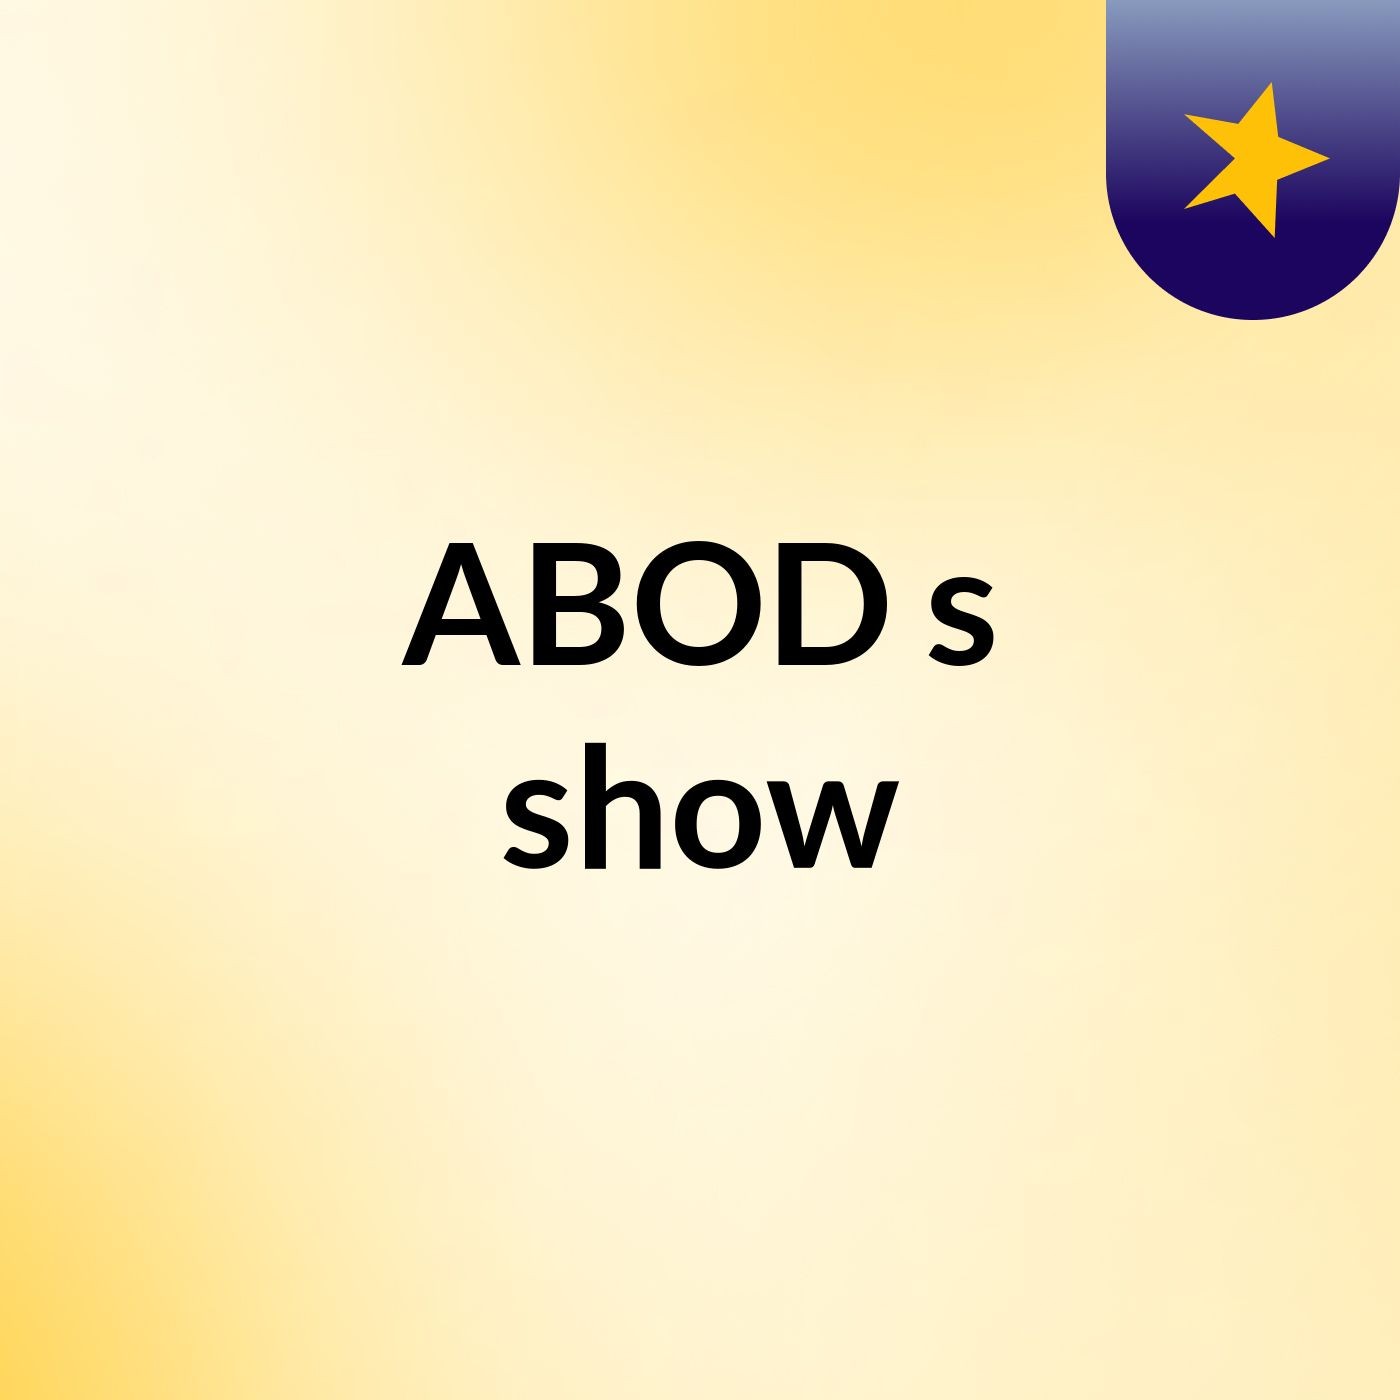 ABOD's show